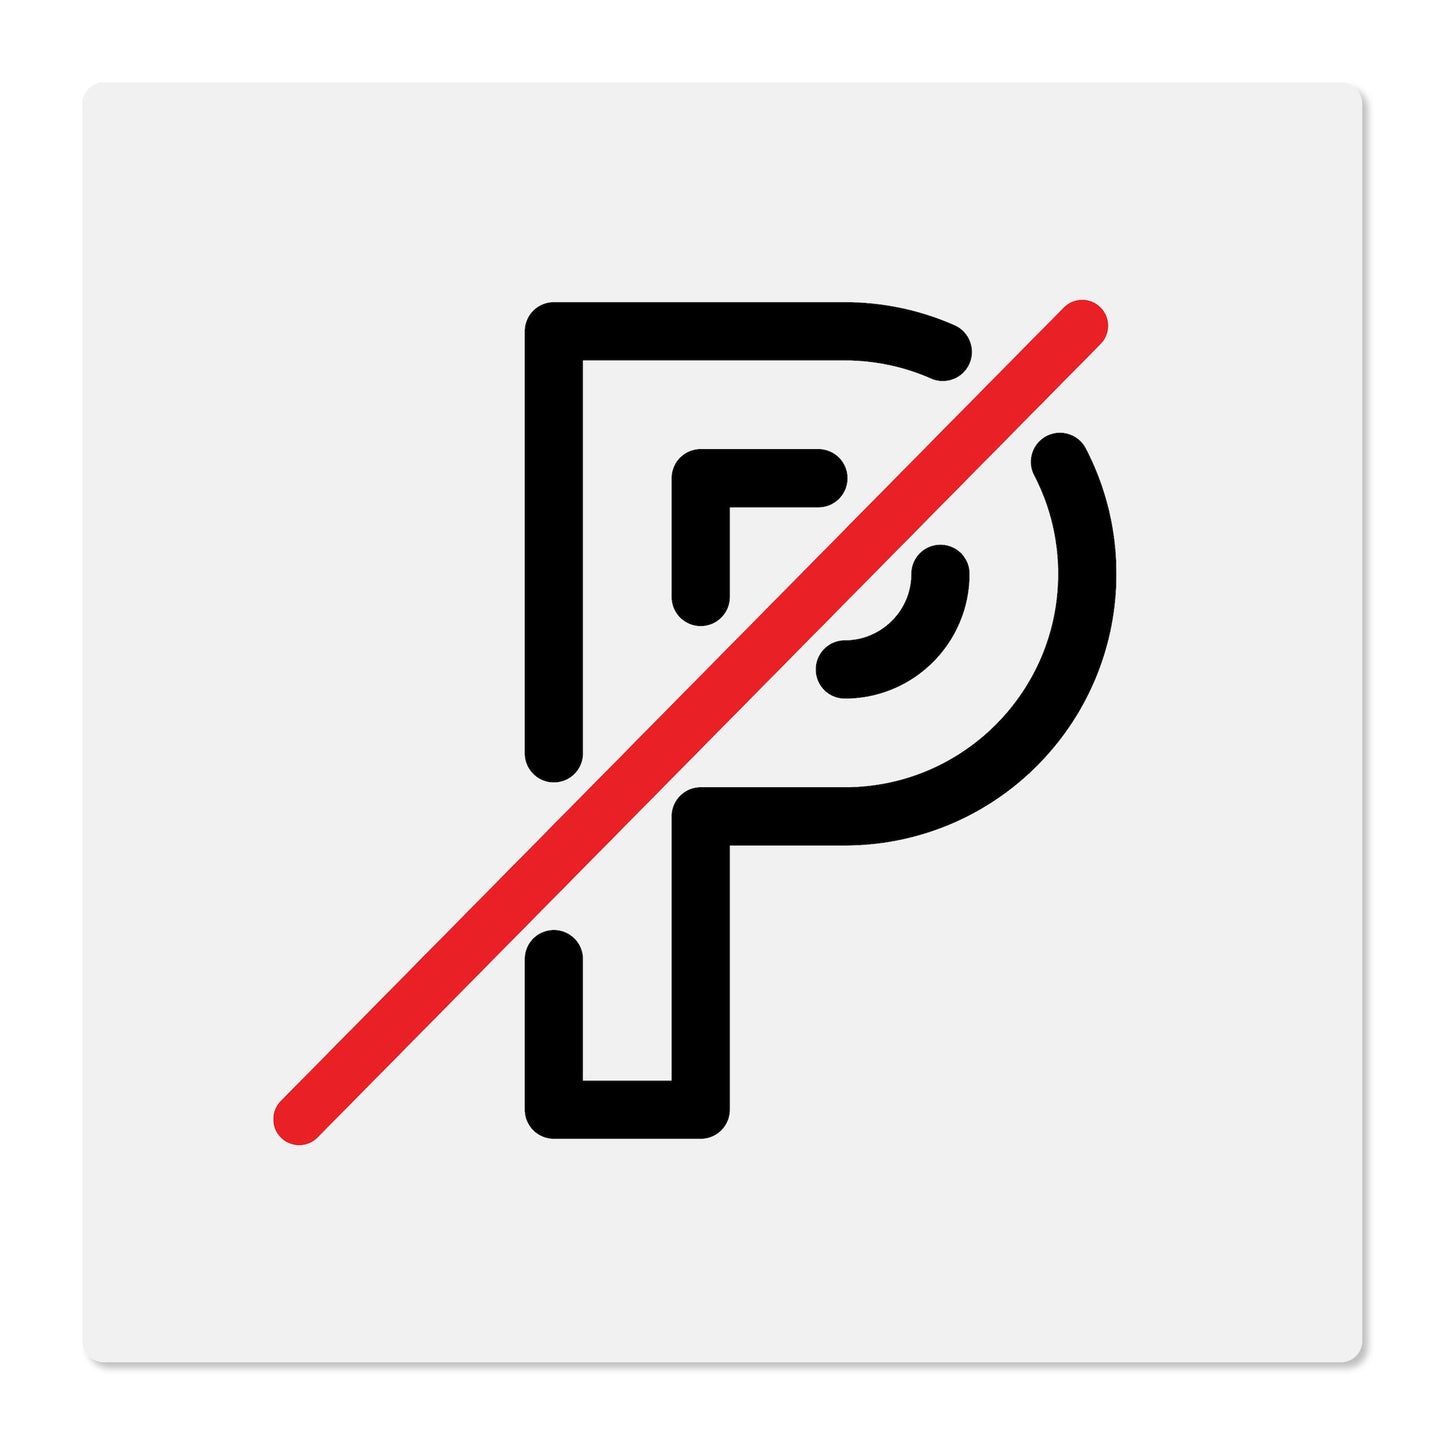 No Parking (Pictogram)